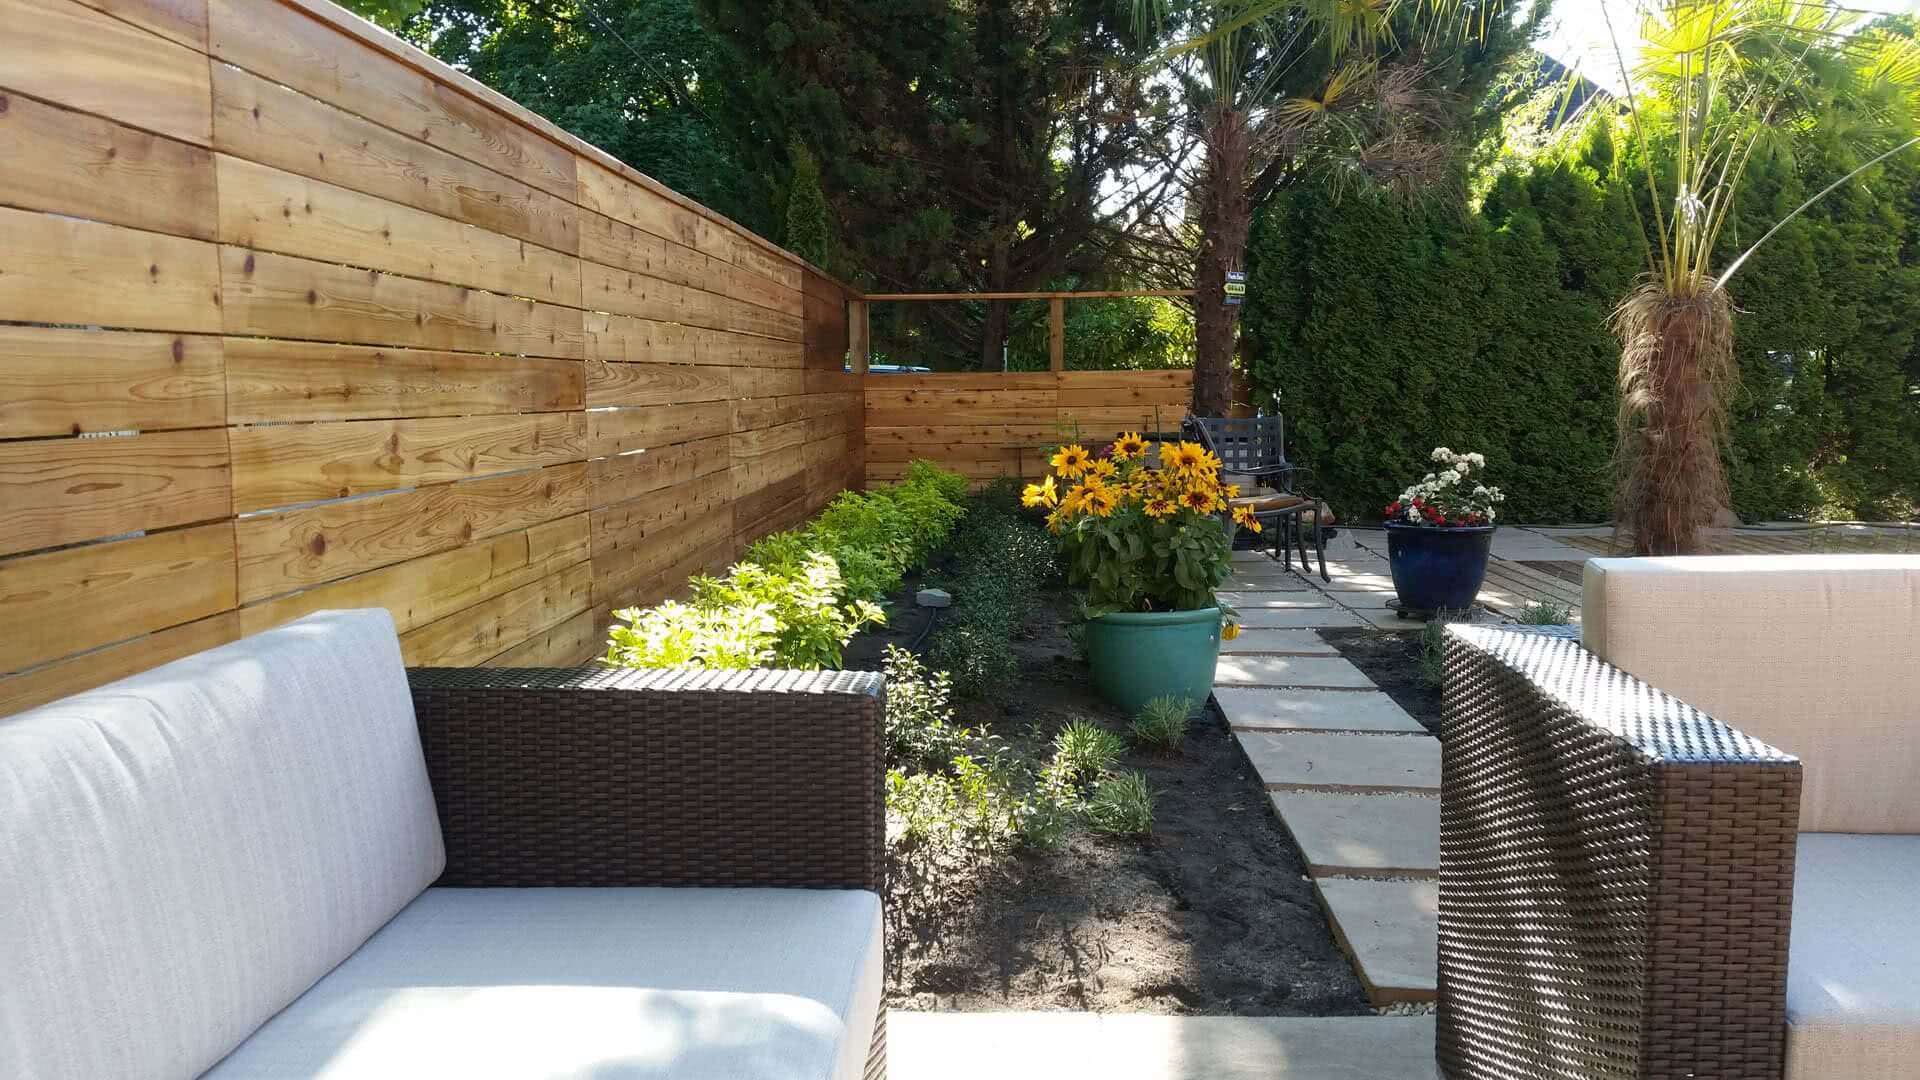 Residential Landscaping - Concrete paving slab detail, custom cedar fencing detail, low maintenance plants